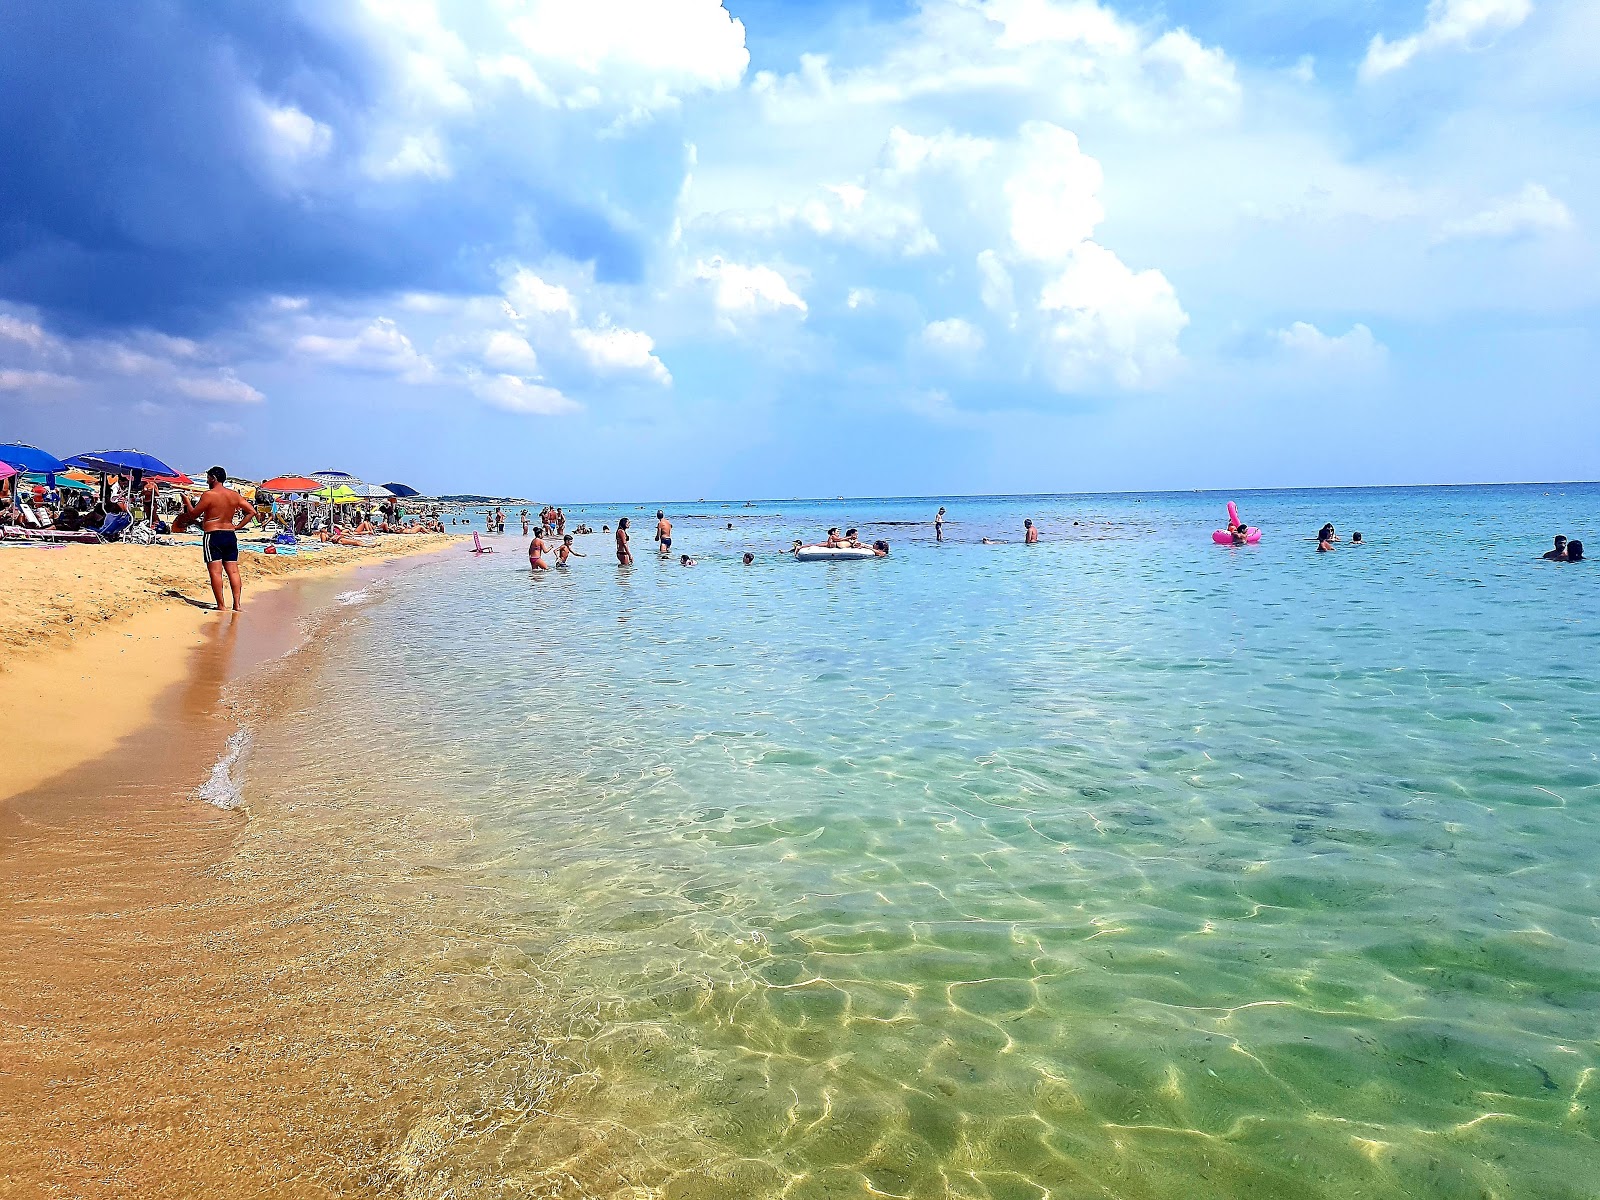 Photo of Spiaggia Di Campomarino with bright sand surface